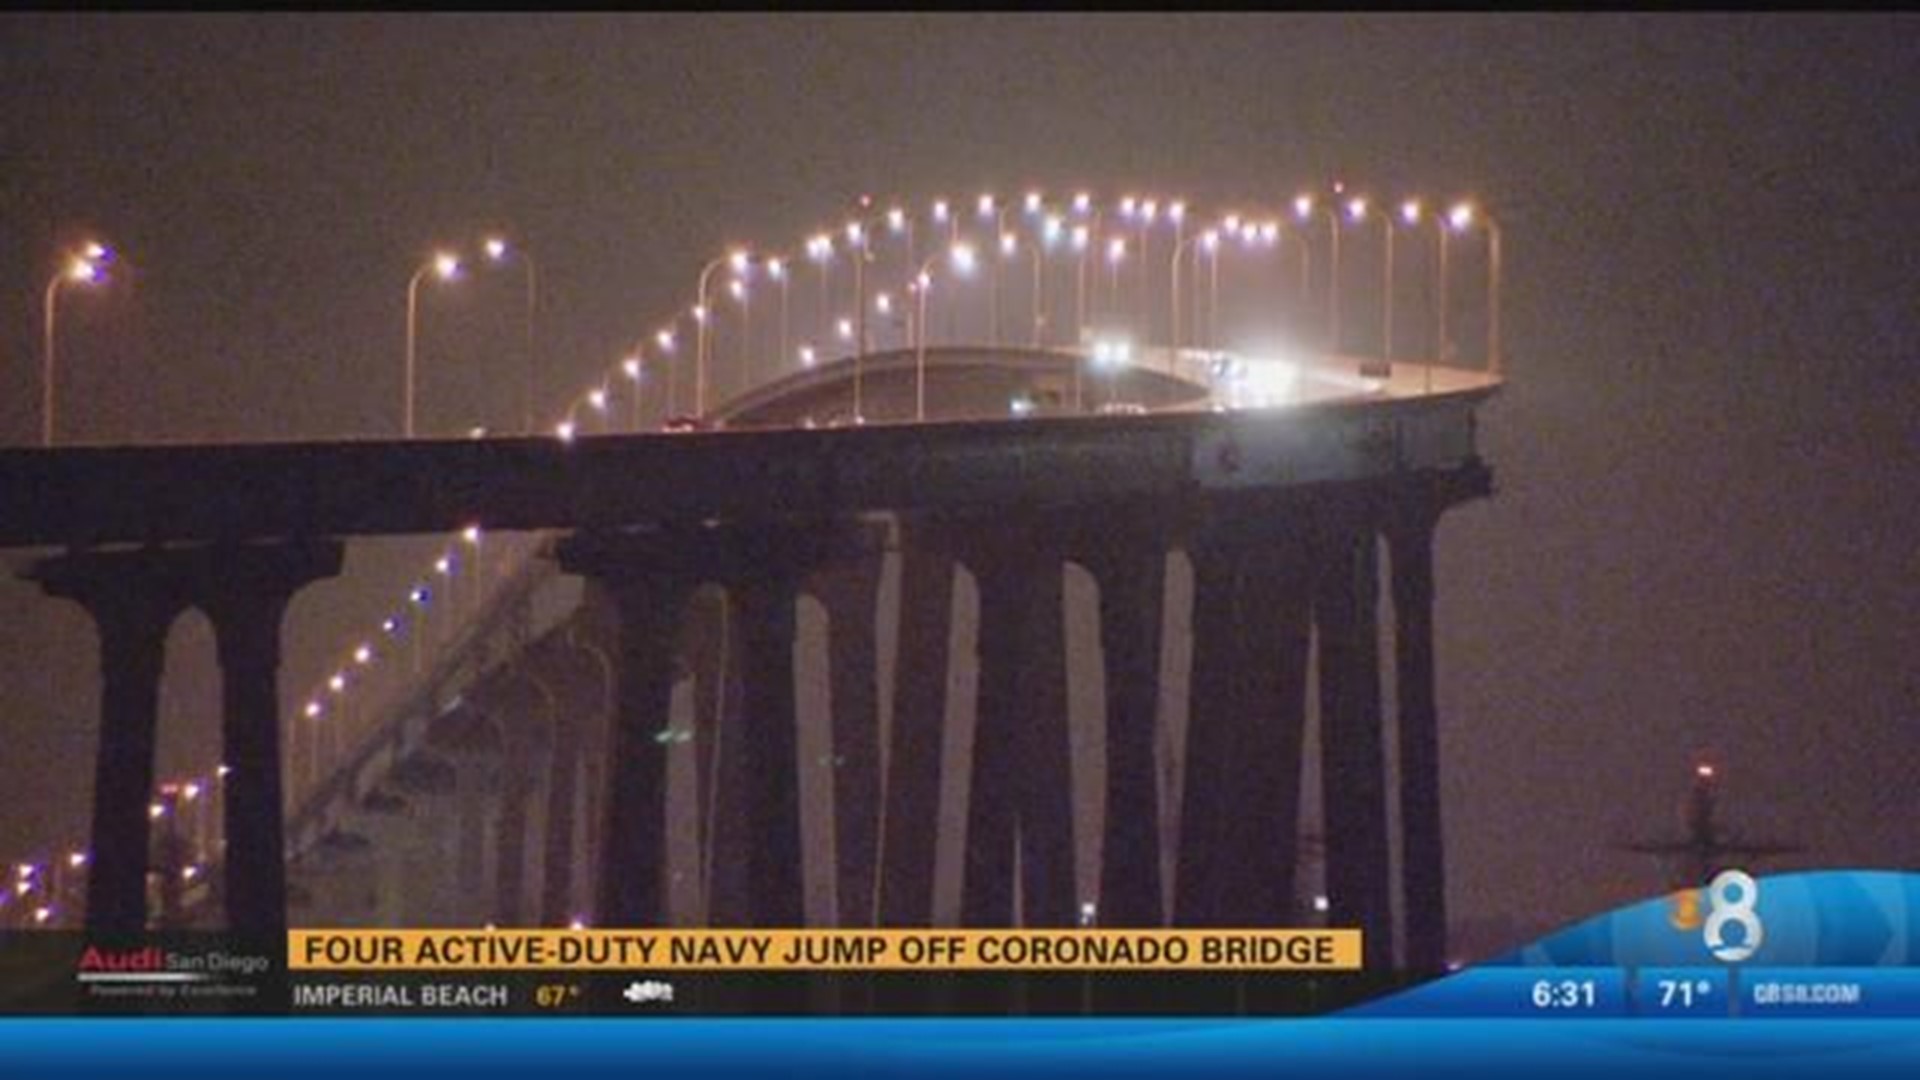 Four ActiveDuty Navy jump off Coronado Bridge